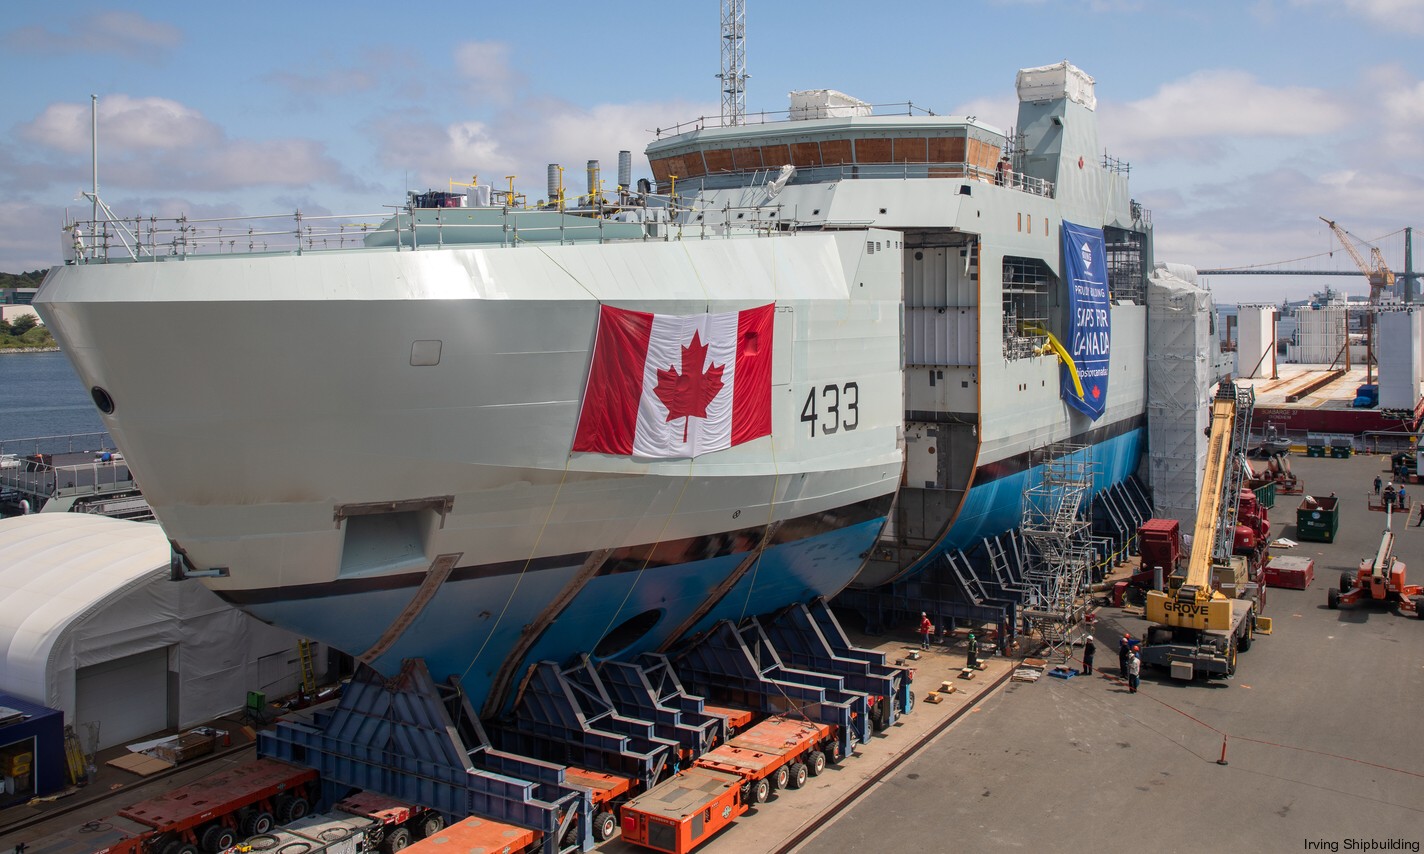 aopv-433 hmcs william hall harry dewolf class arctic offshore patrol vessel ship ncsm royal canadian navy 13